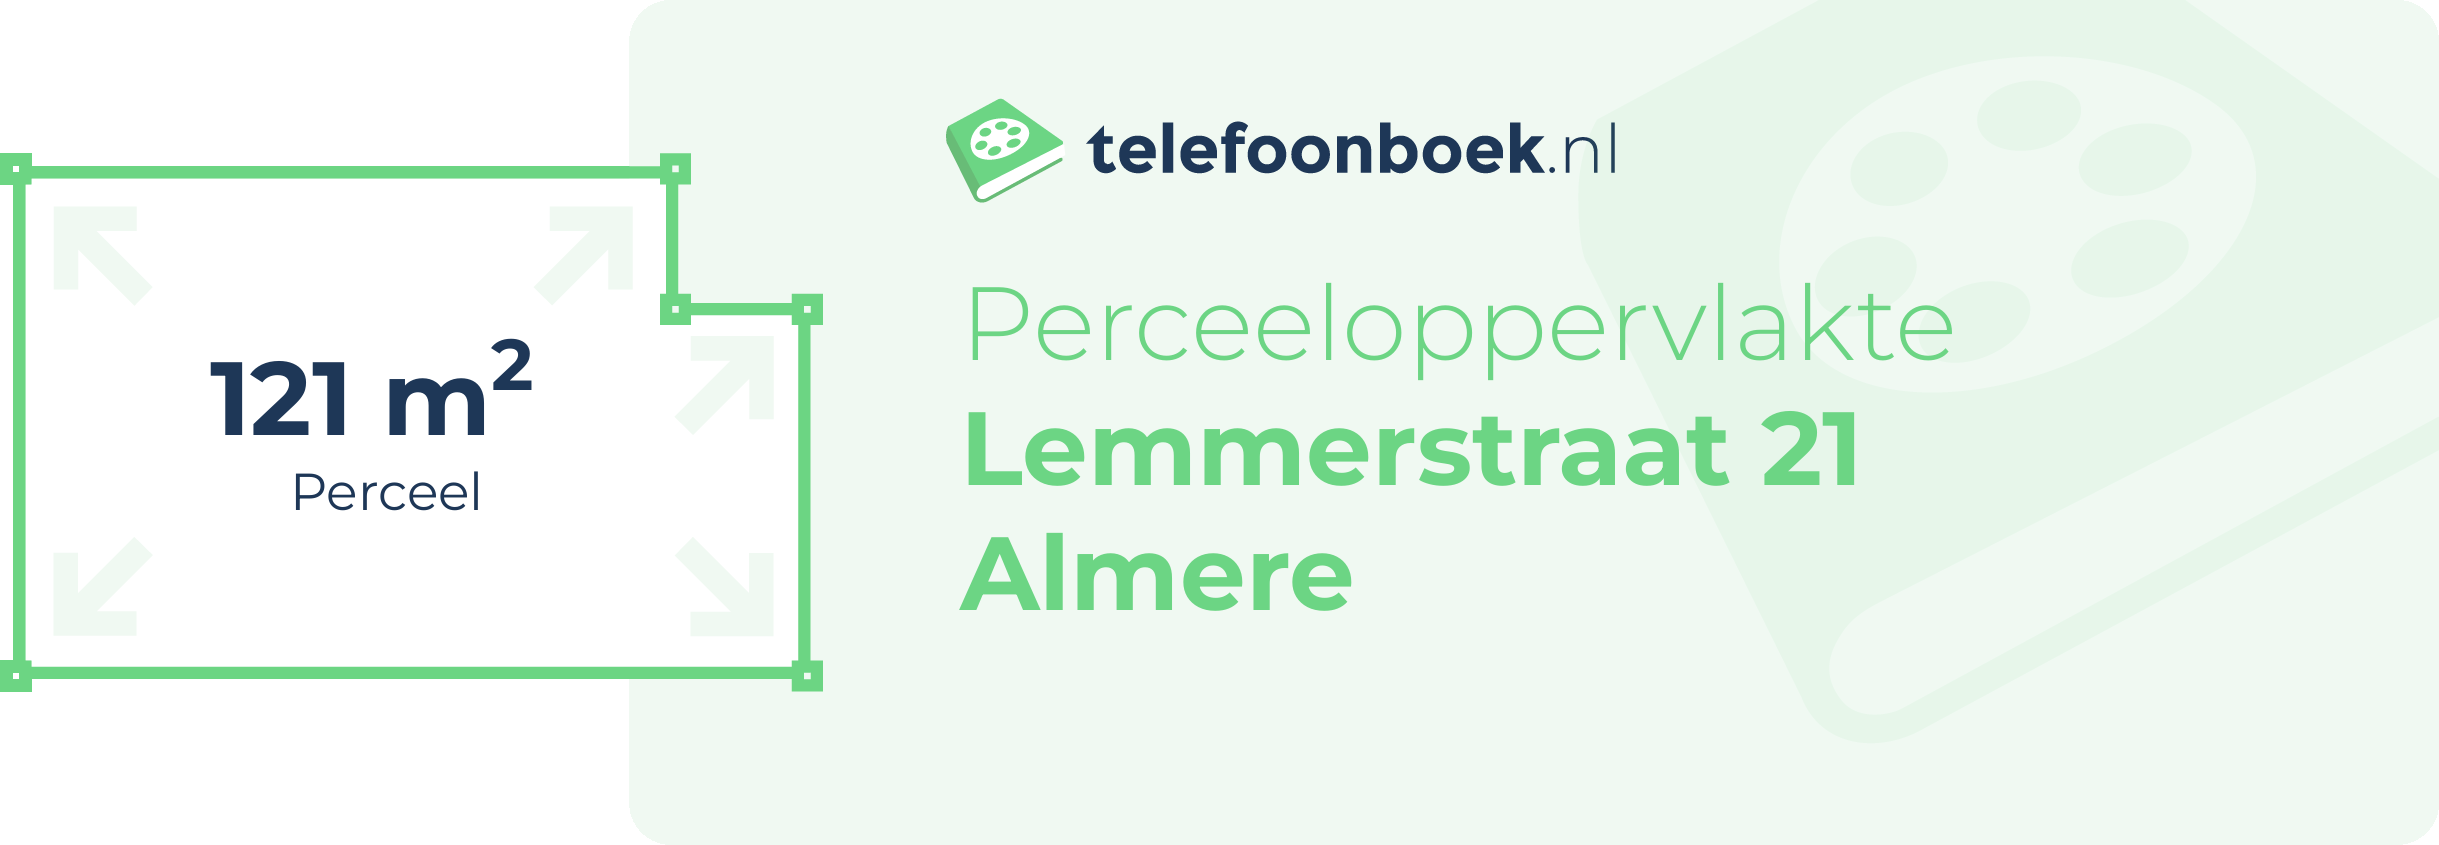 Perceeloppervlakte Lemmerstraat 21 Almere